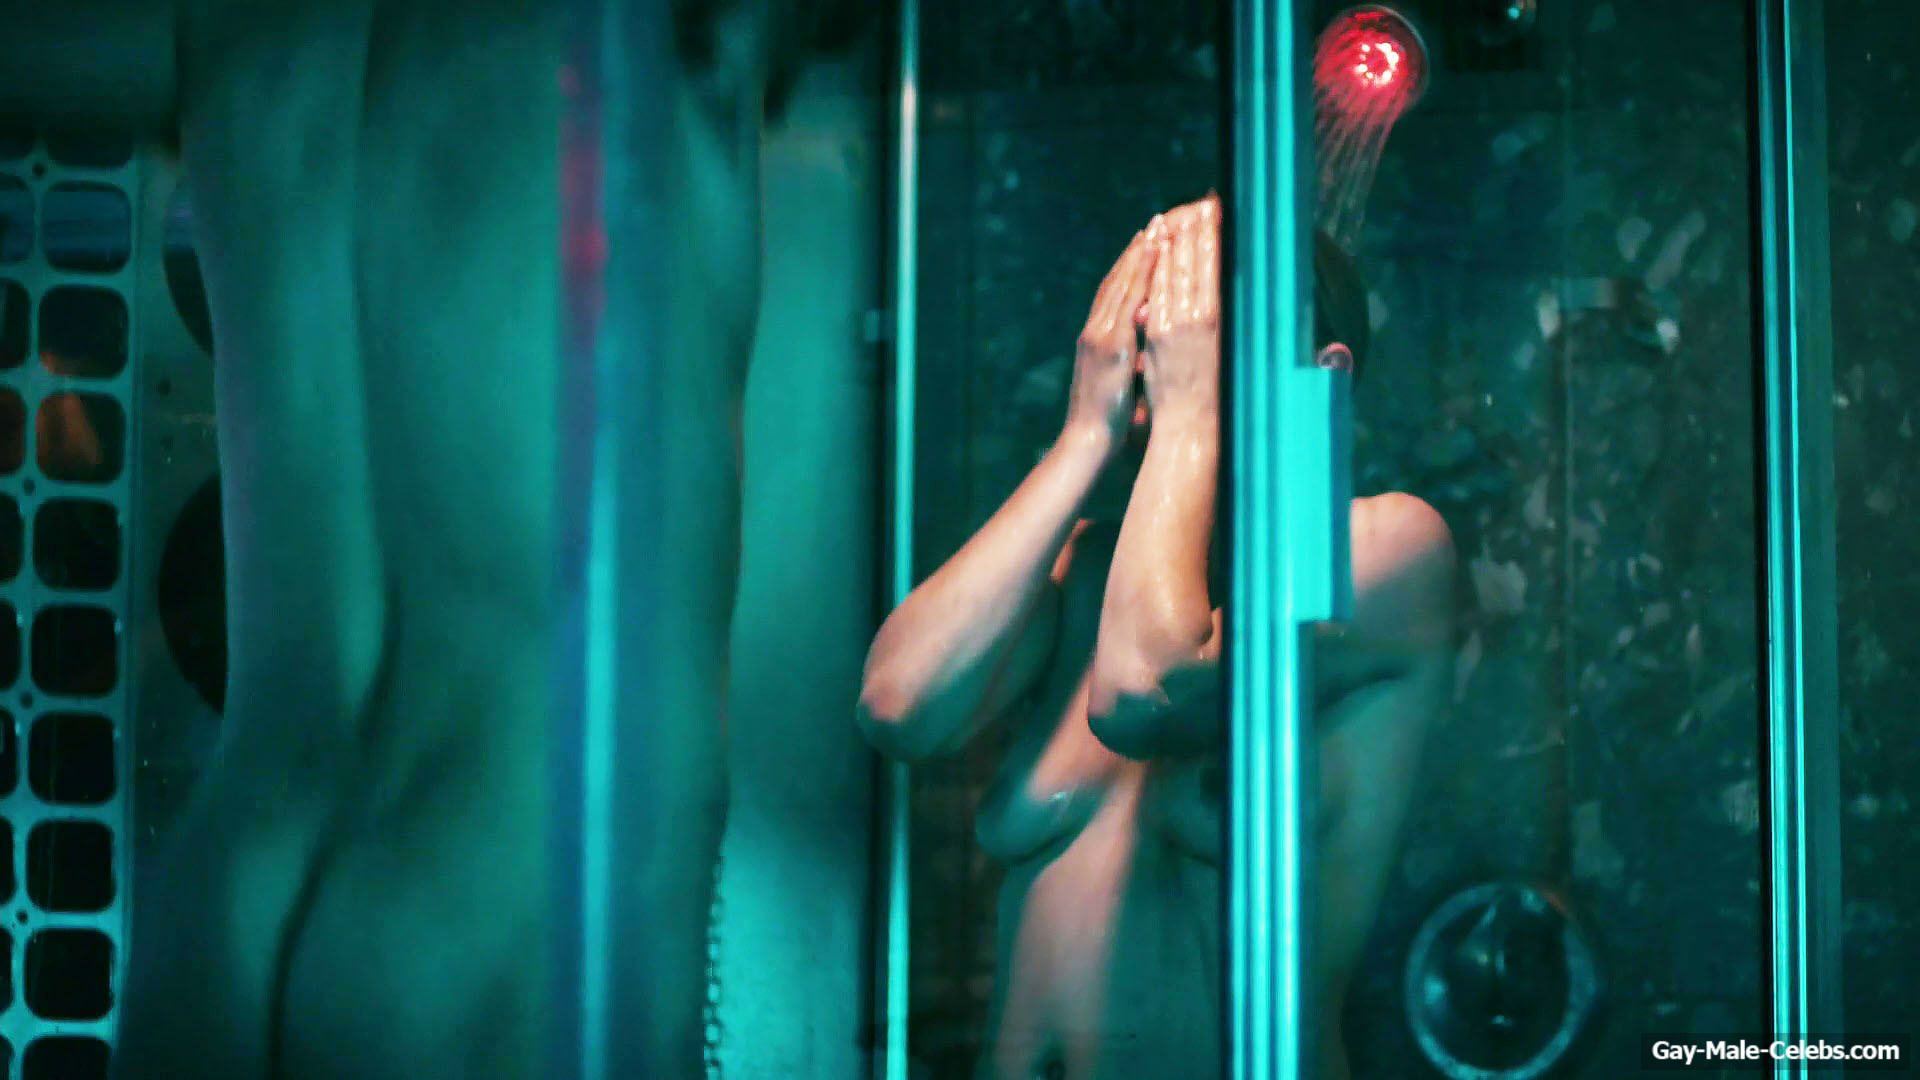 Ryan Gosling nude in shower